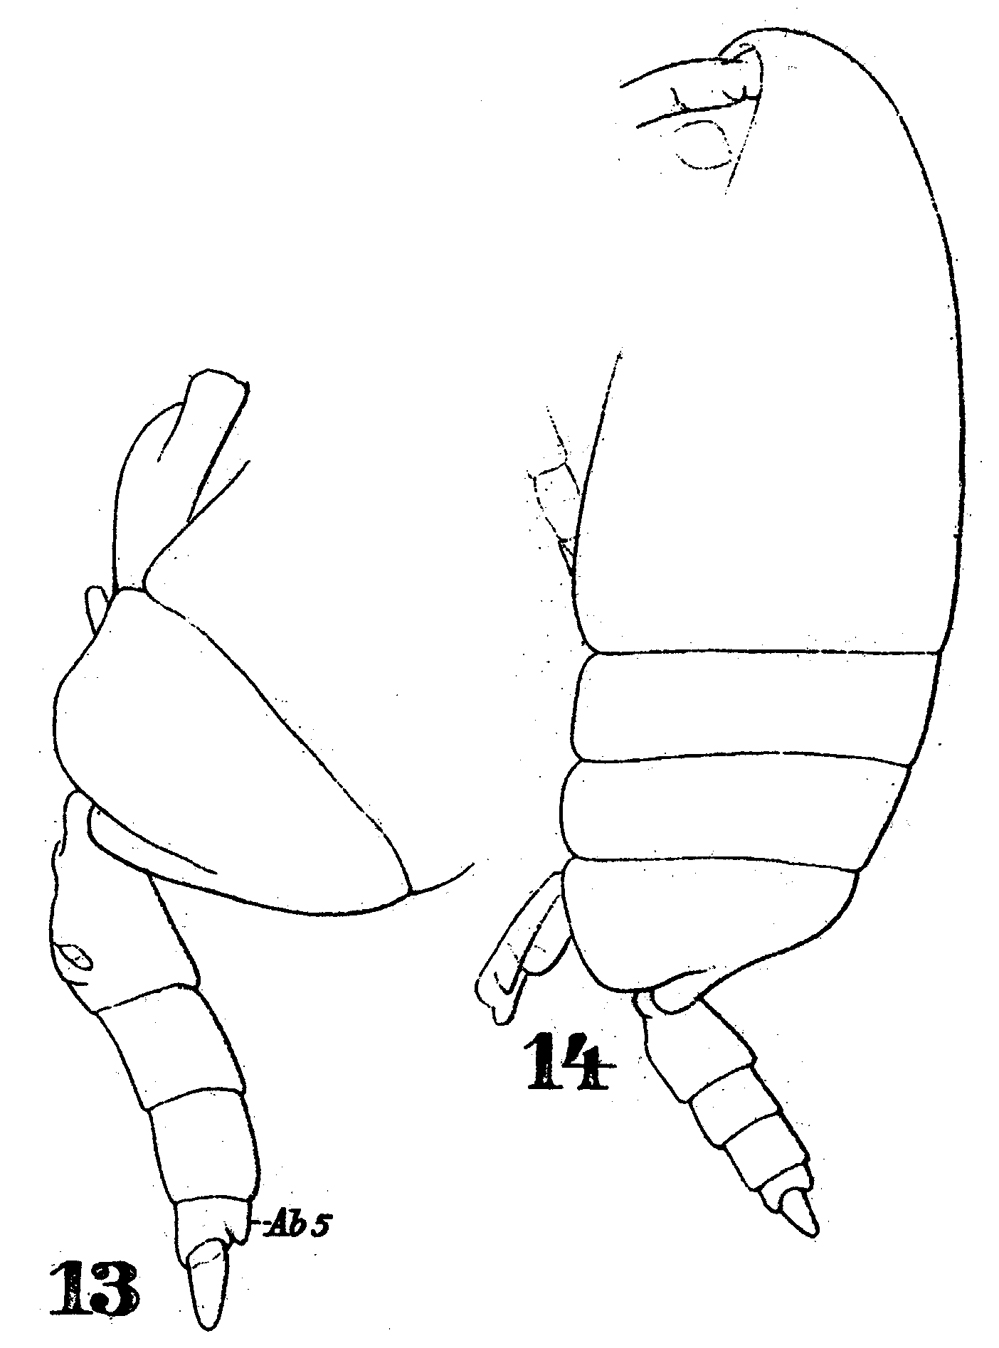 Species Scolecithricella dentata - Plate 19 of morphological figures